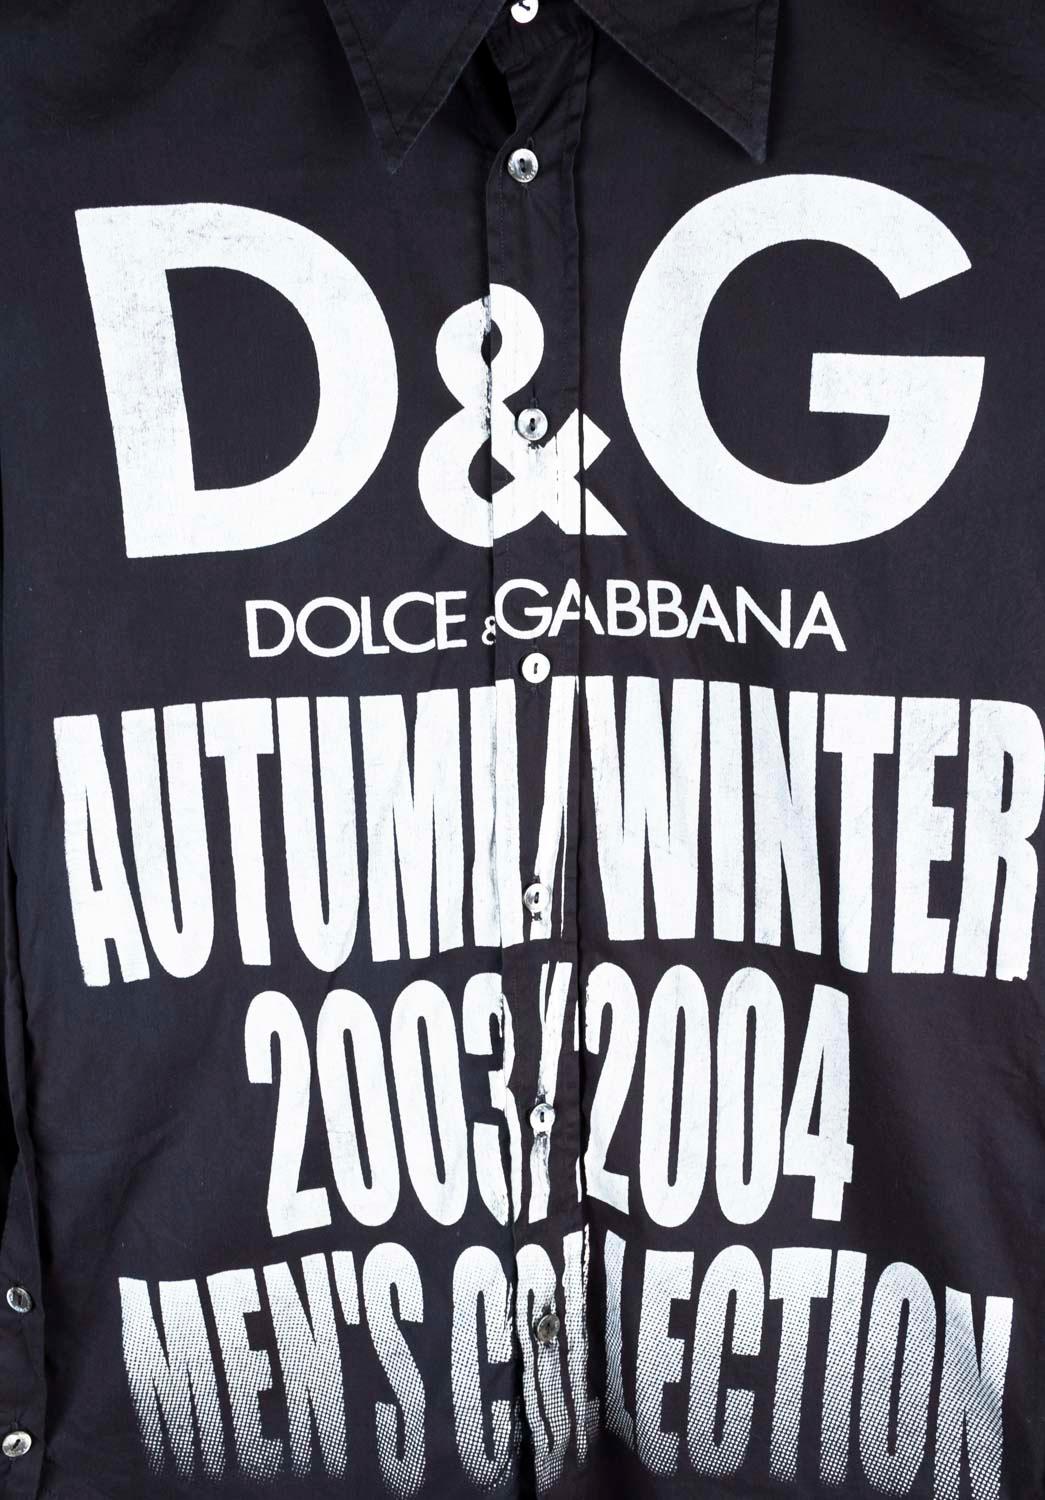 Dolce&Gabbana D&G Men Shirt Runway Vintage Size 30/44 (S/M) In Good Condition For Sale In Kaunas, LT